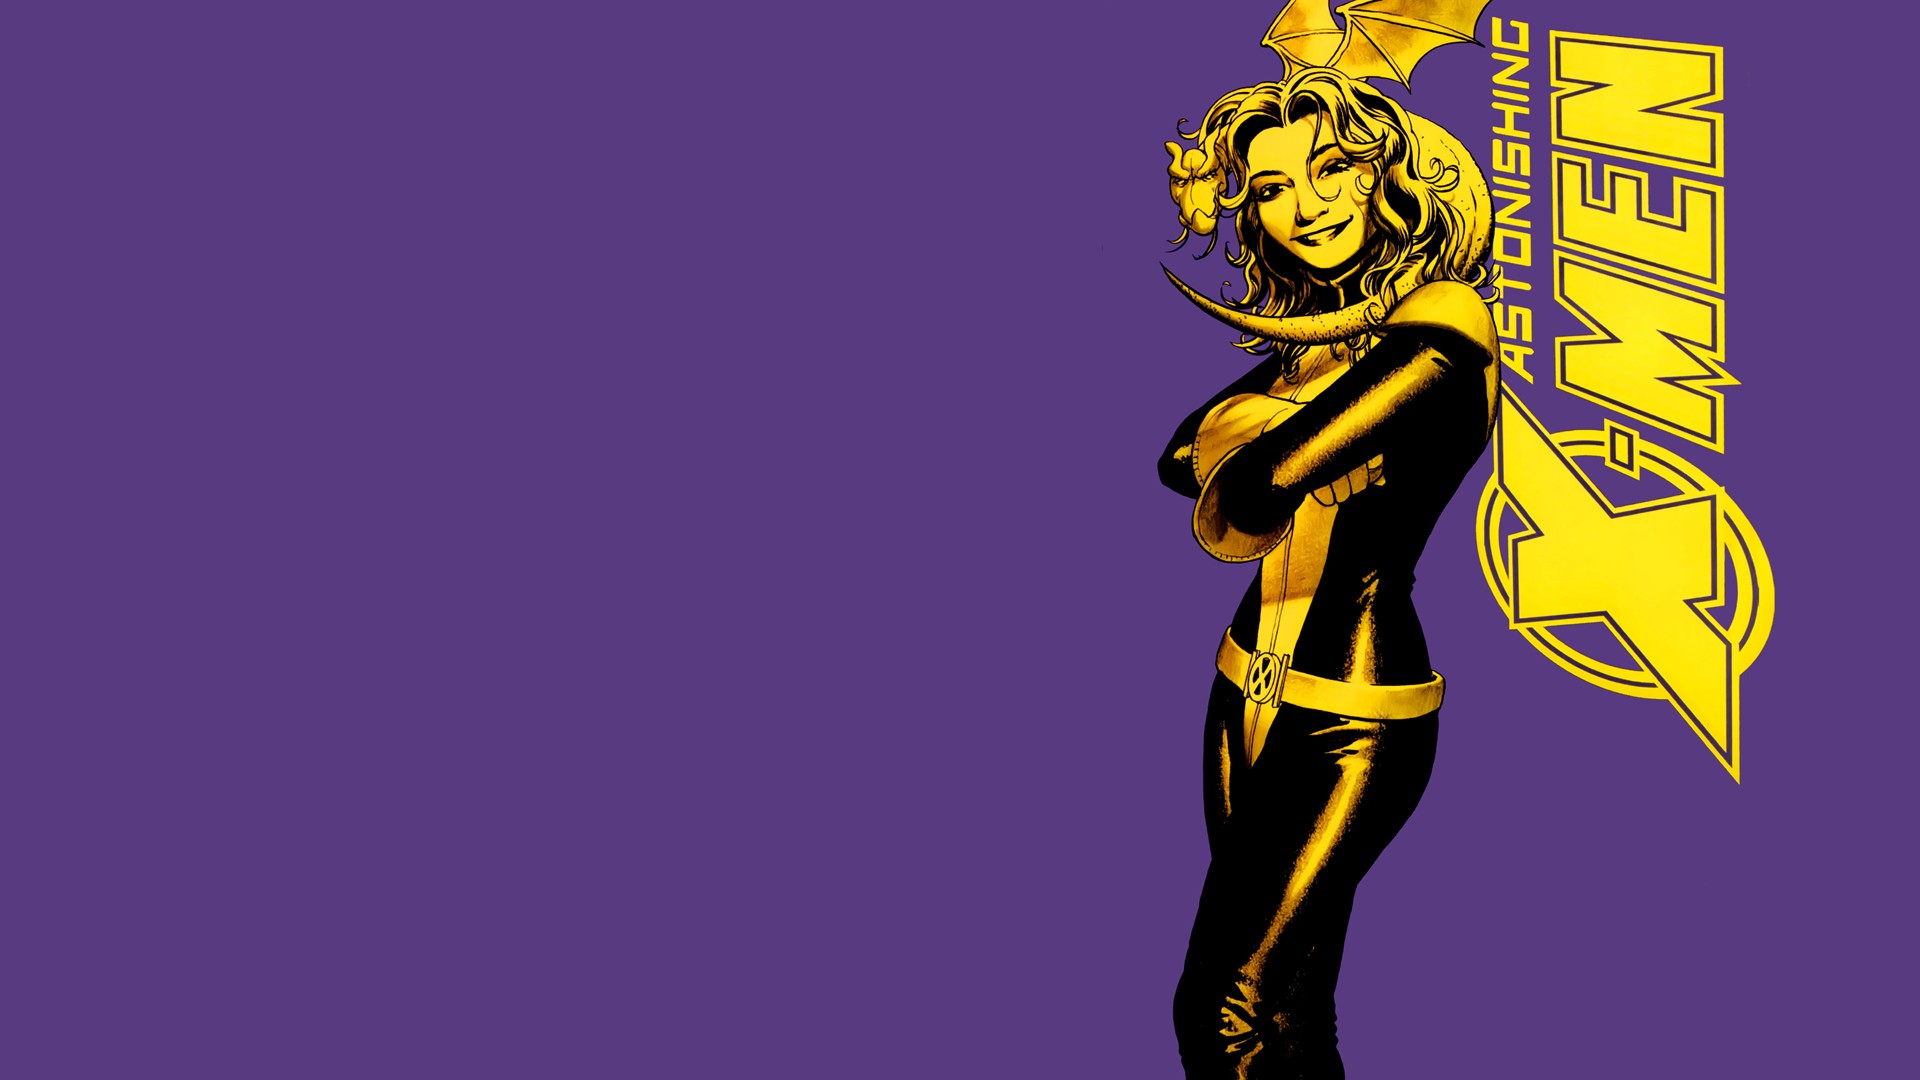 Bande-dessinées Astonishing X-Men Fond d'écran HD | Image